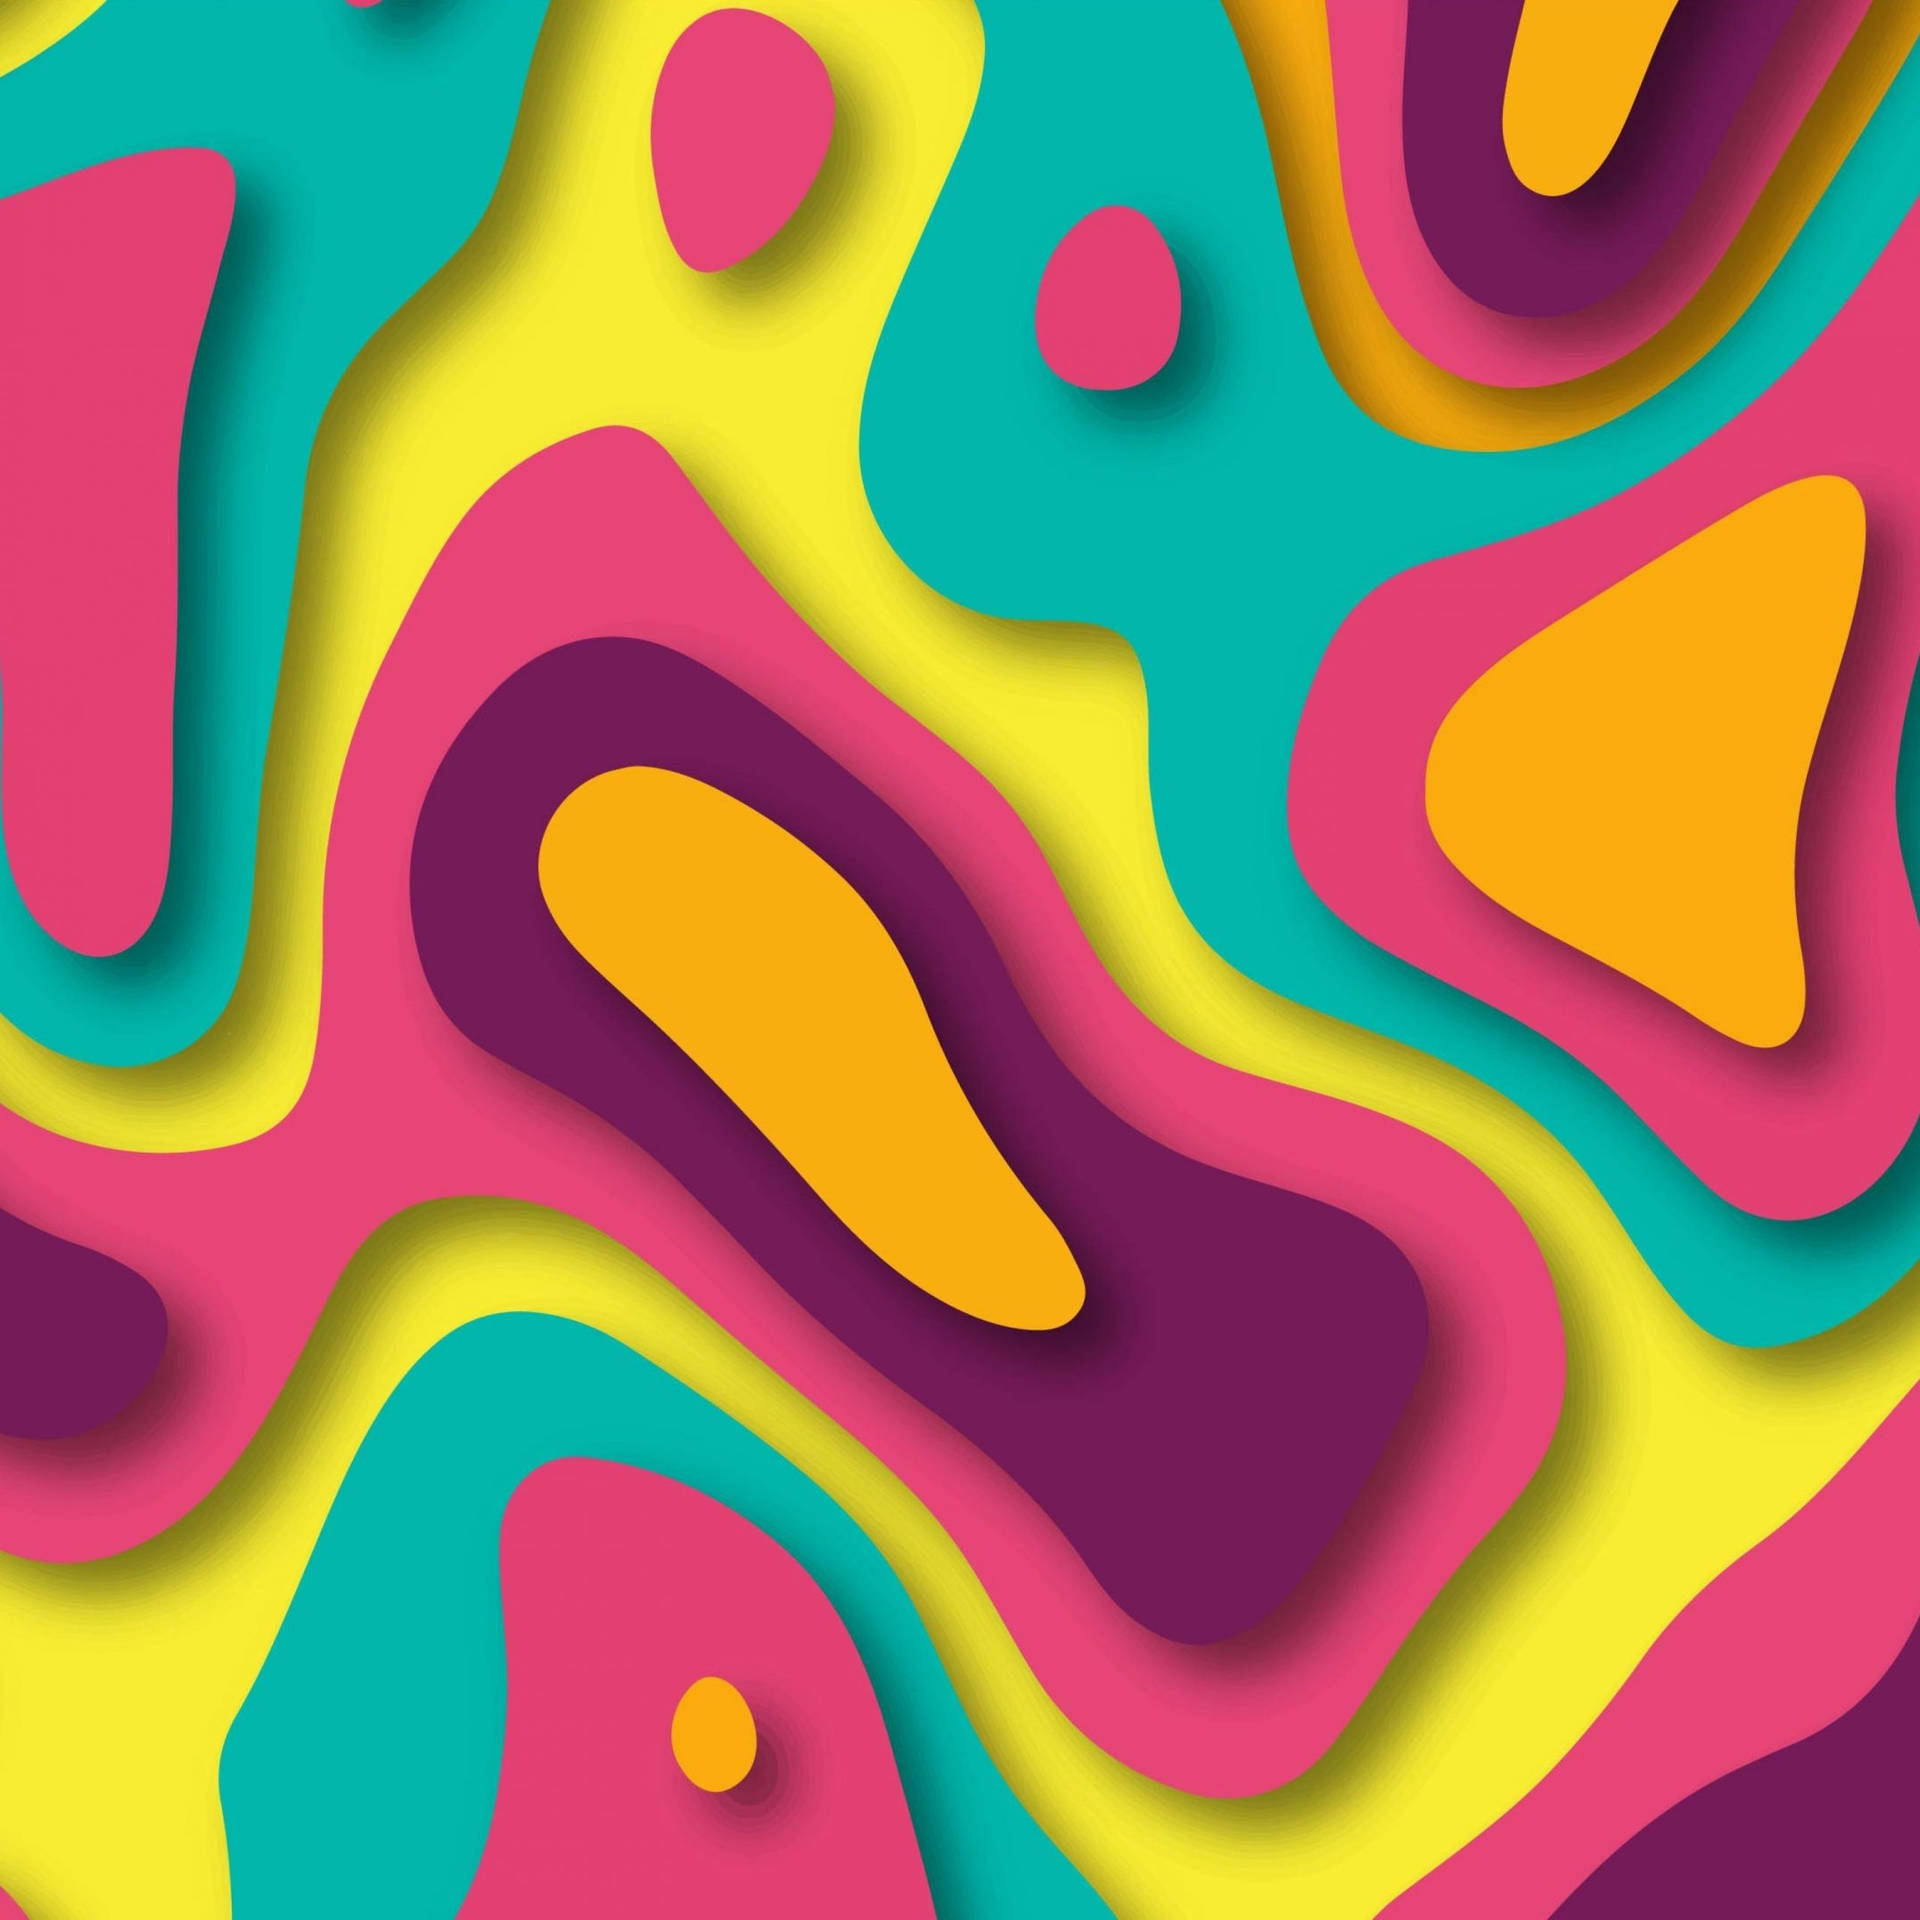 Ipad Pro 12.9 Colorful Shapes Wallpaper